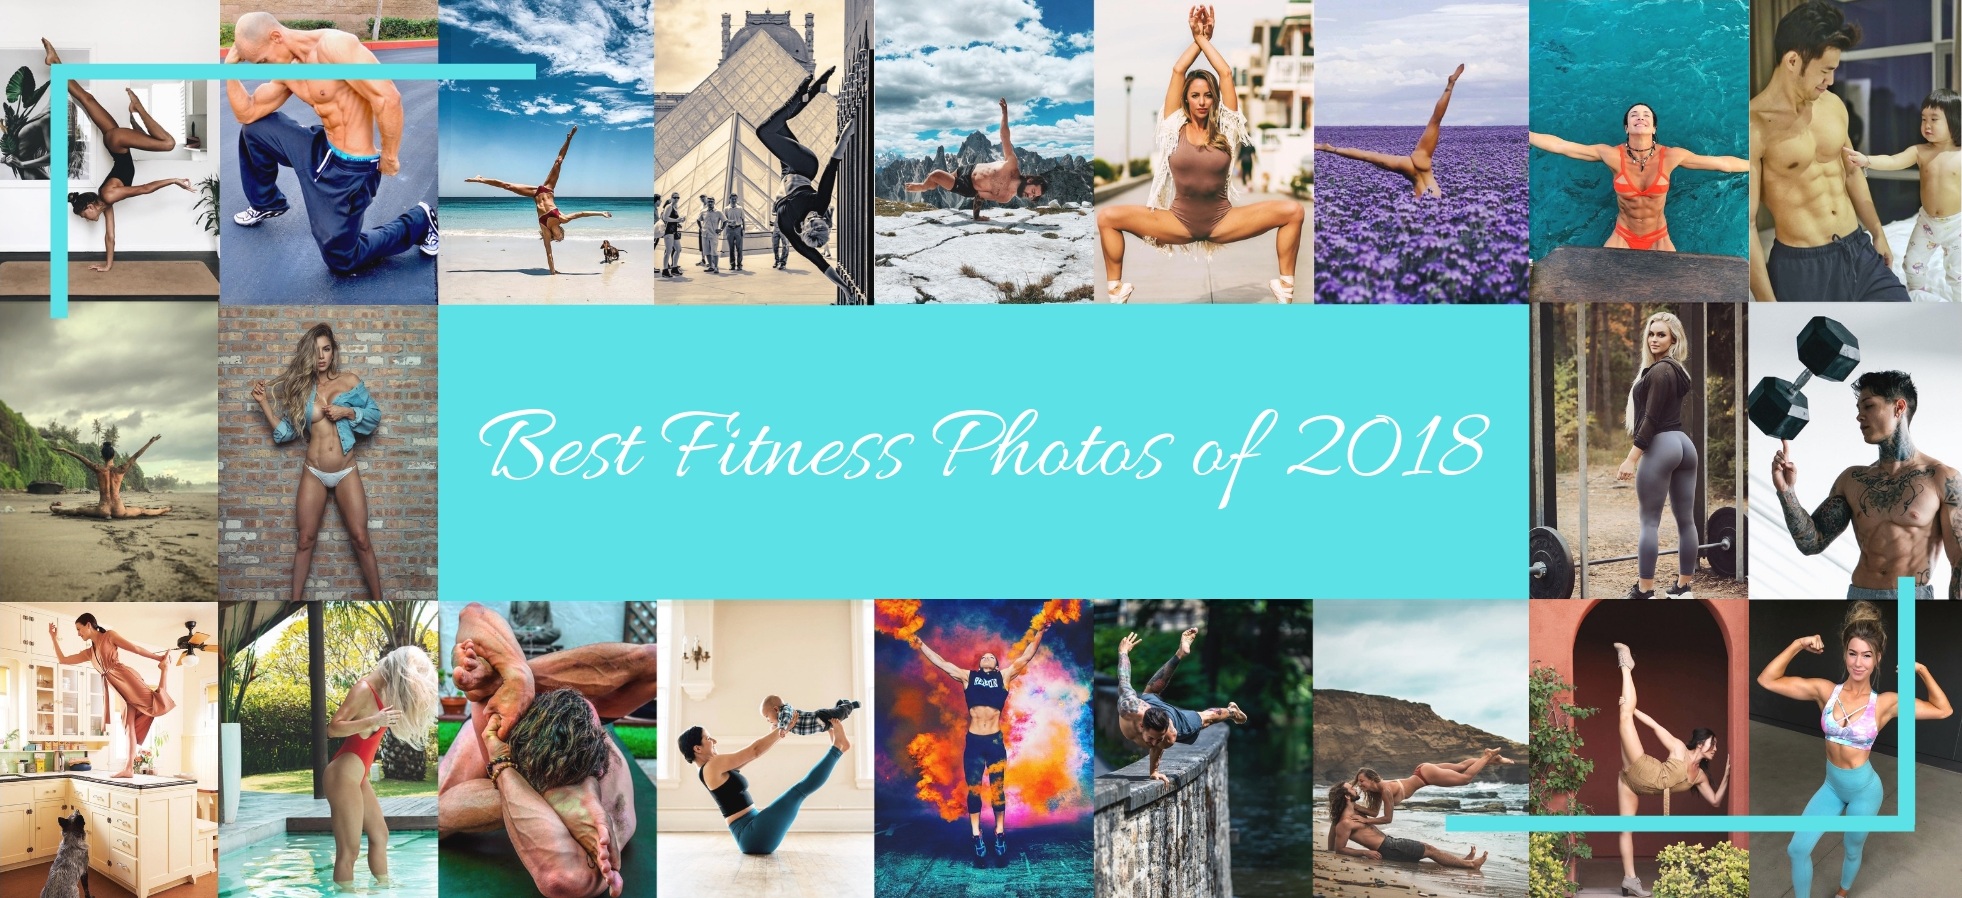 Best fitness photos